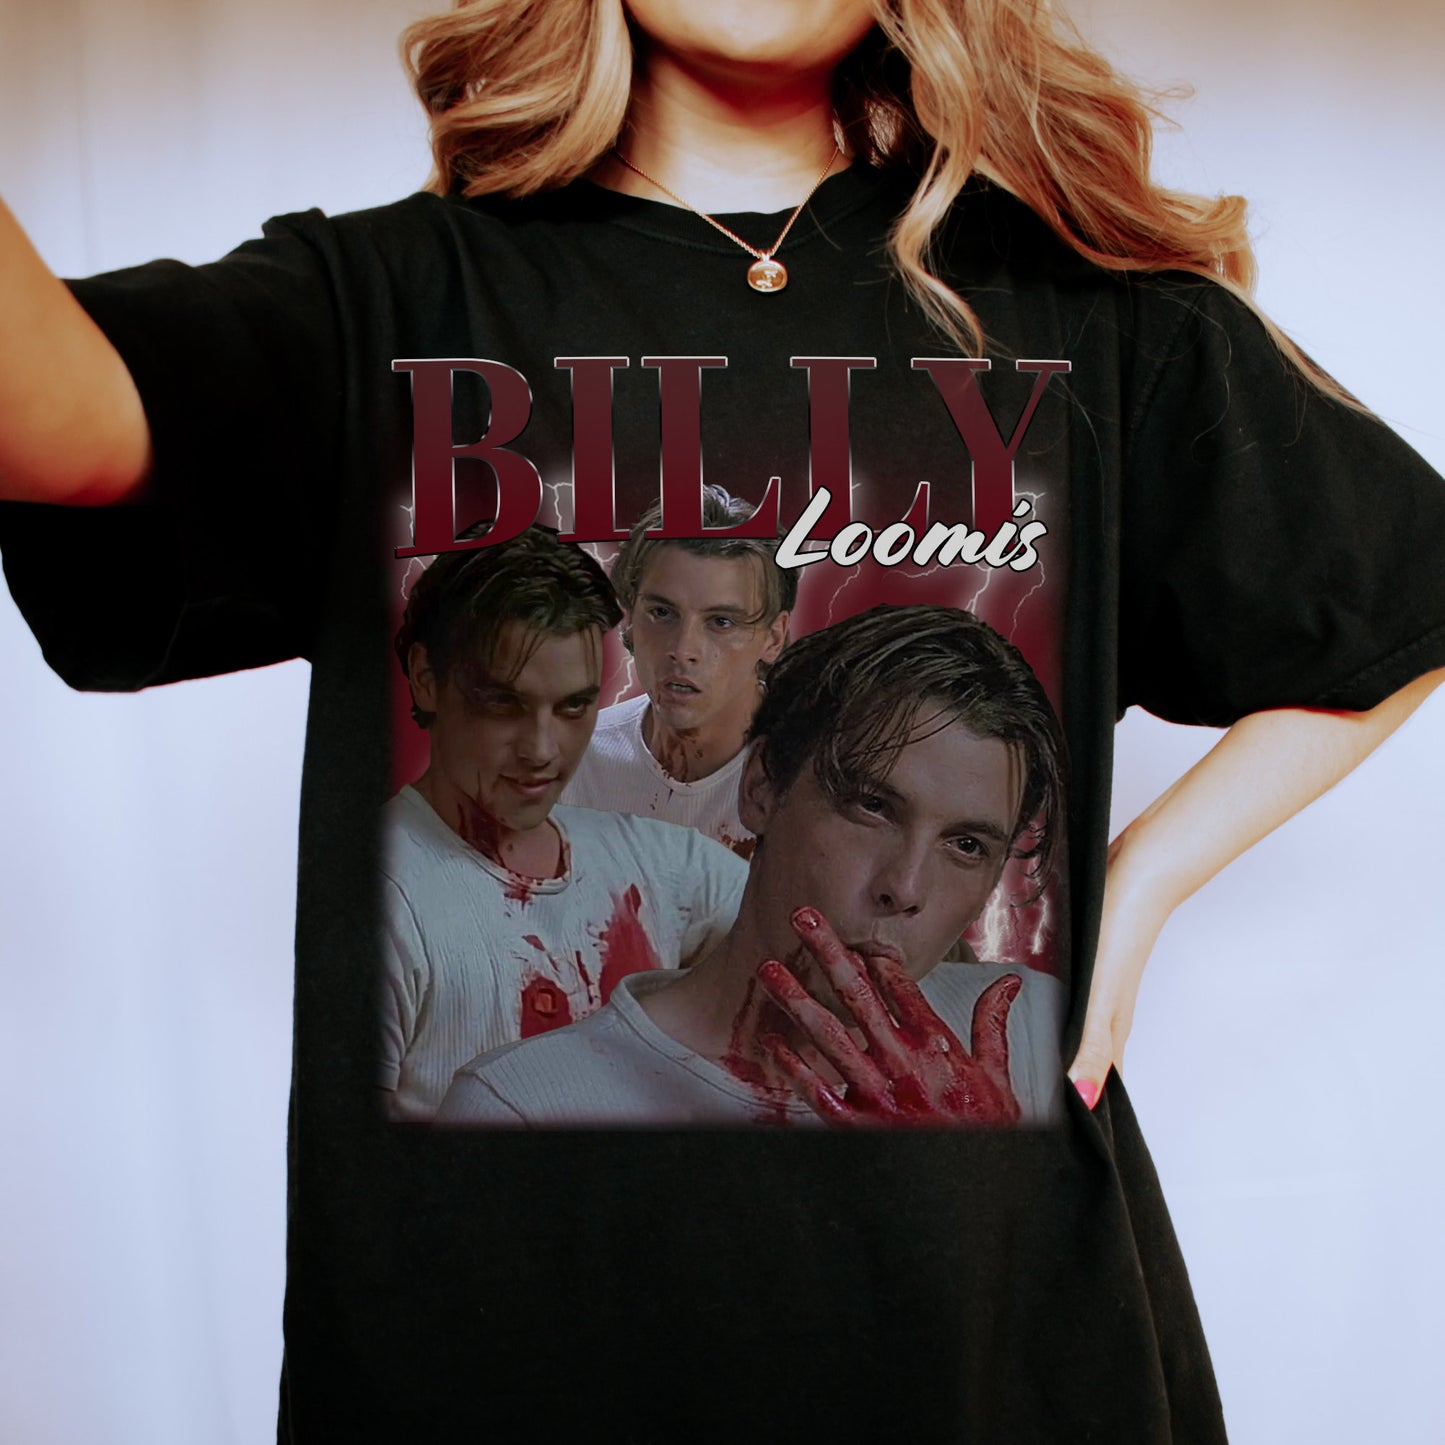 Retro Billy Loomis Shirt, Retro Scream shirt,Let's Watch Scary Movie Shirt, Scary Horror Tee, Stu Macher, Sidney Precott, Comfort color